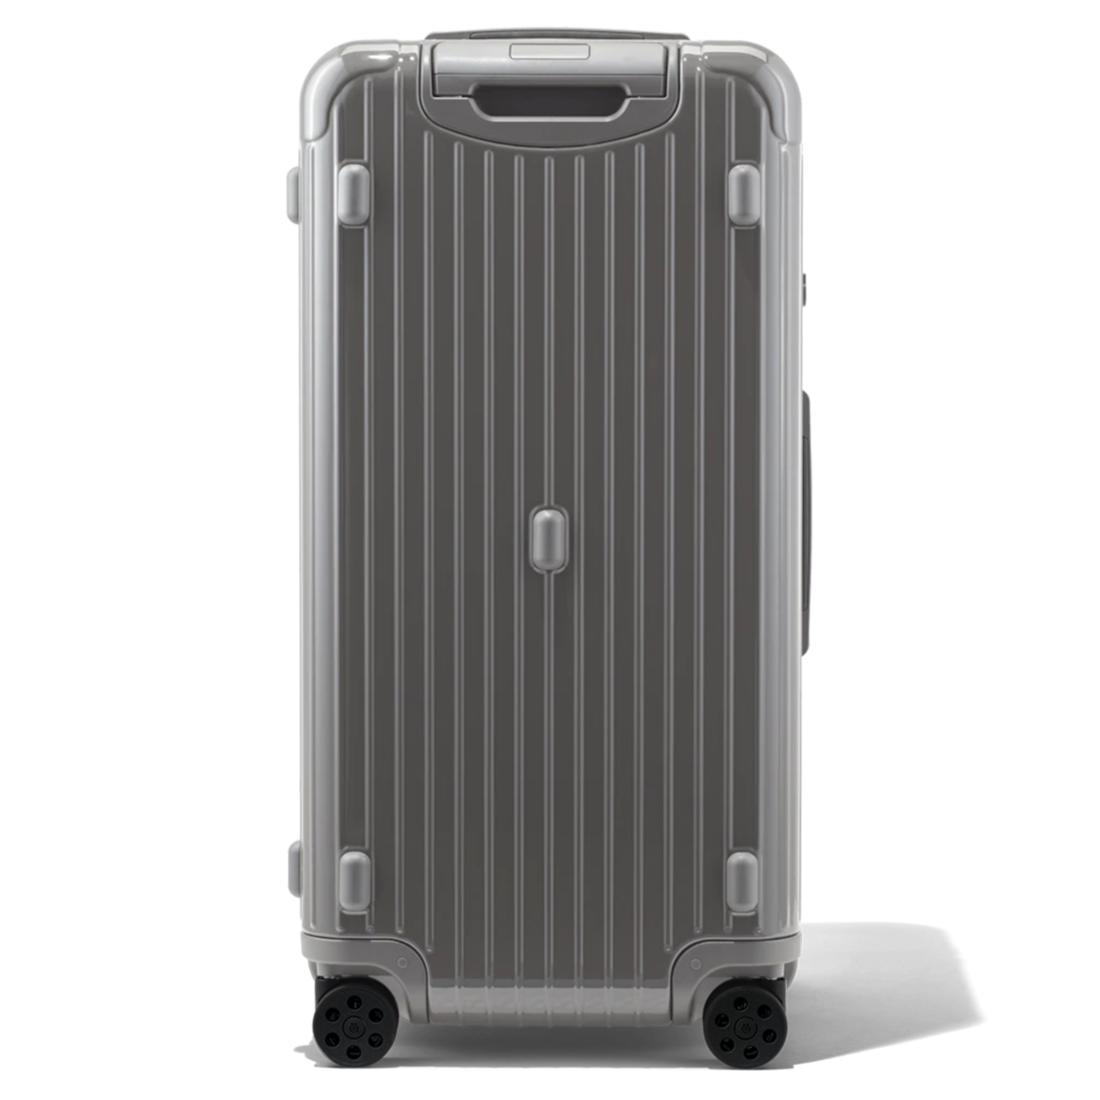 RIMOWA Essential 80 Trunk Plus Spinner Luggage - White